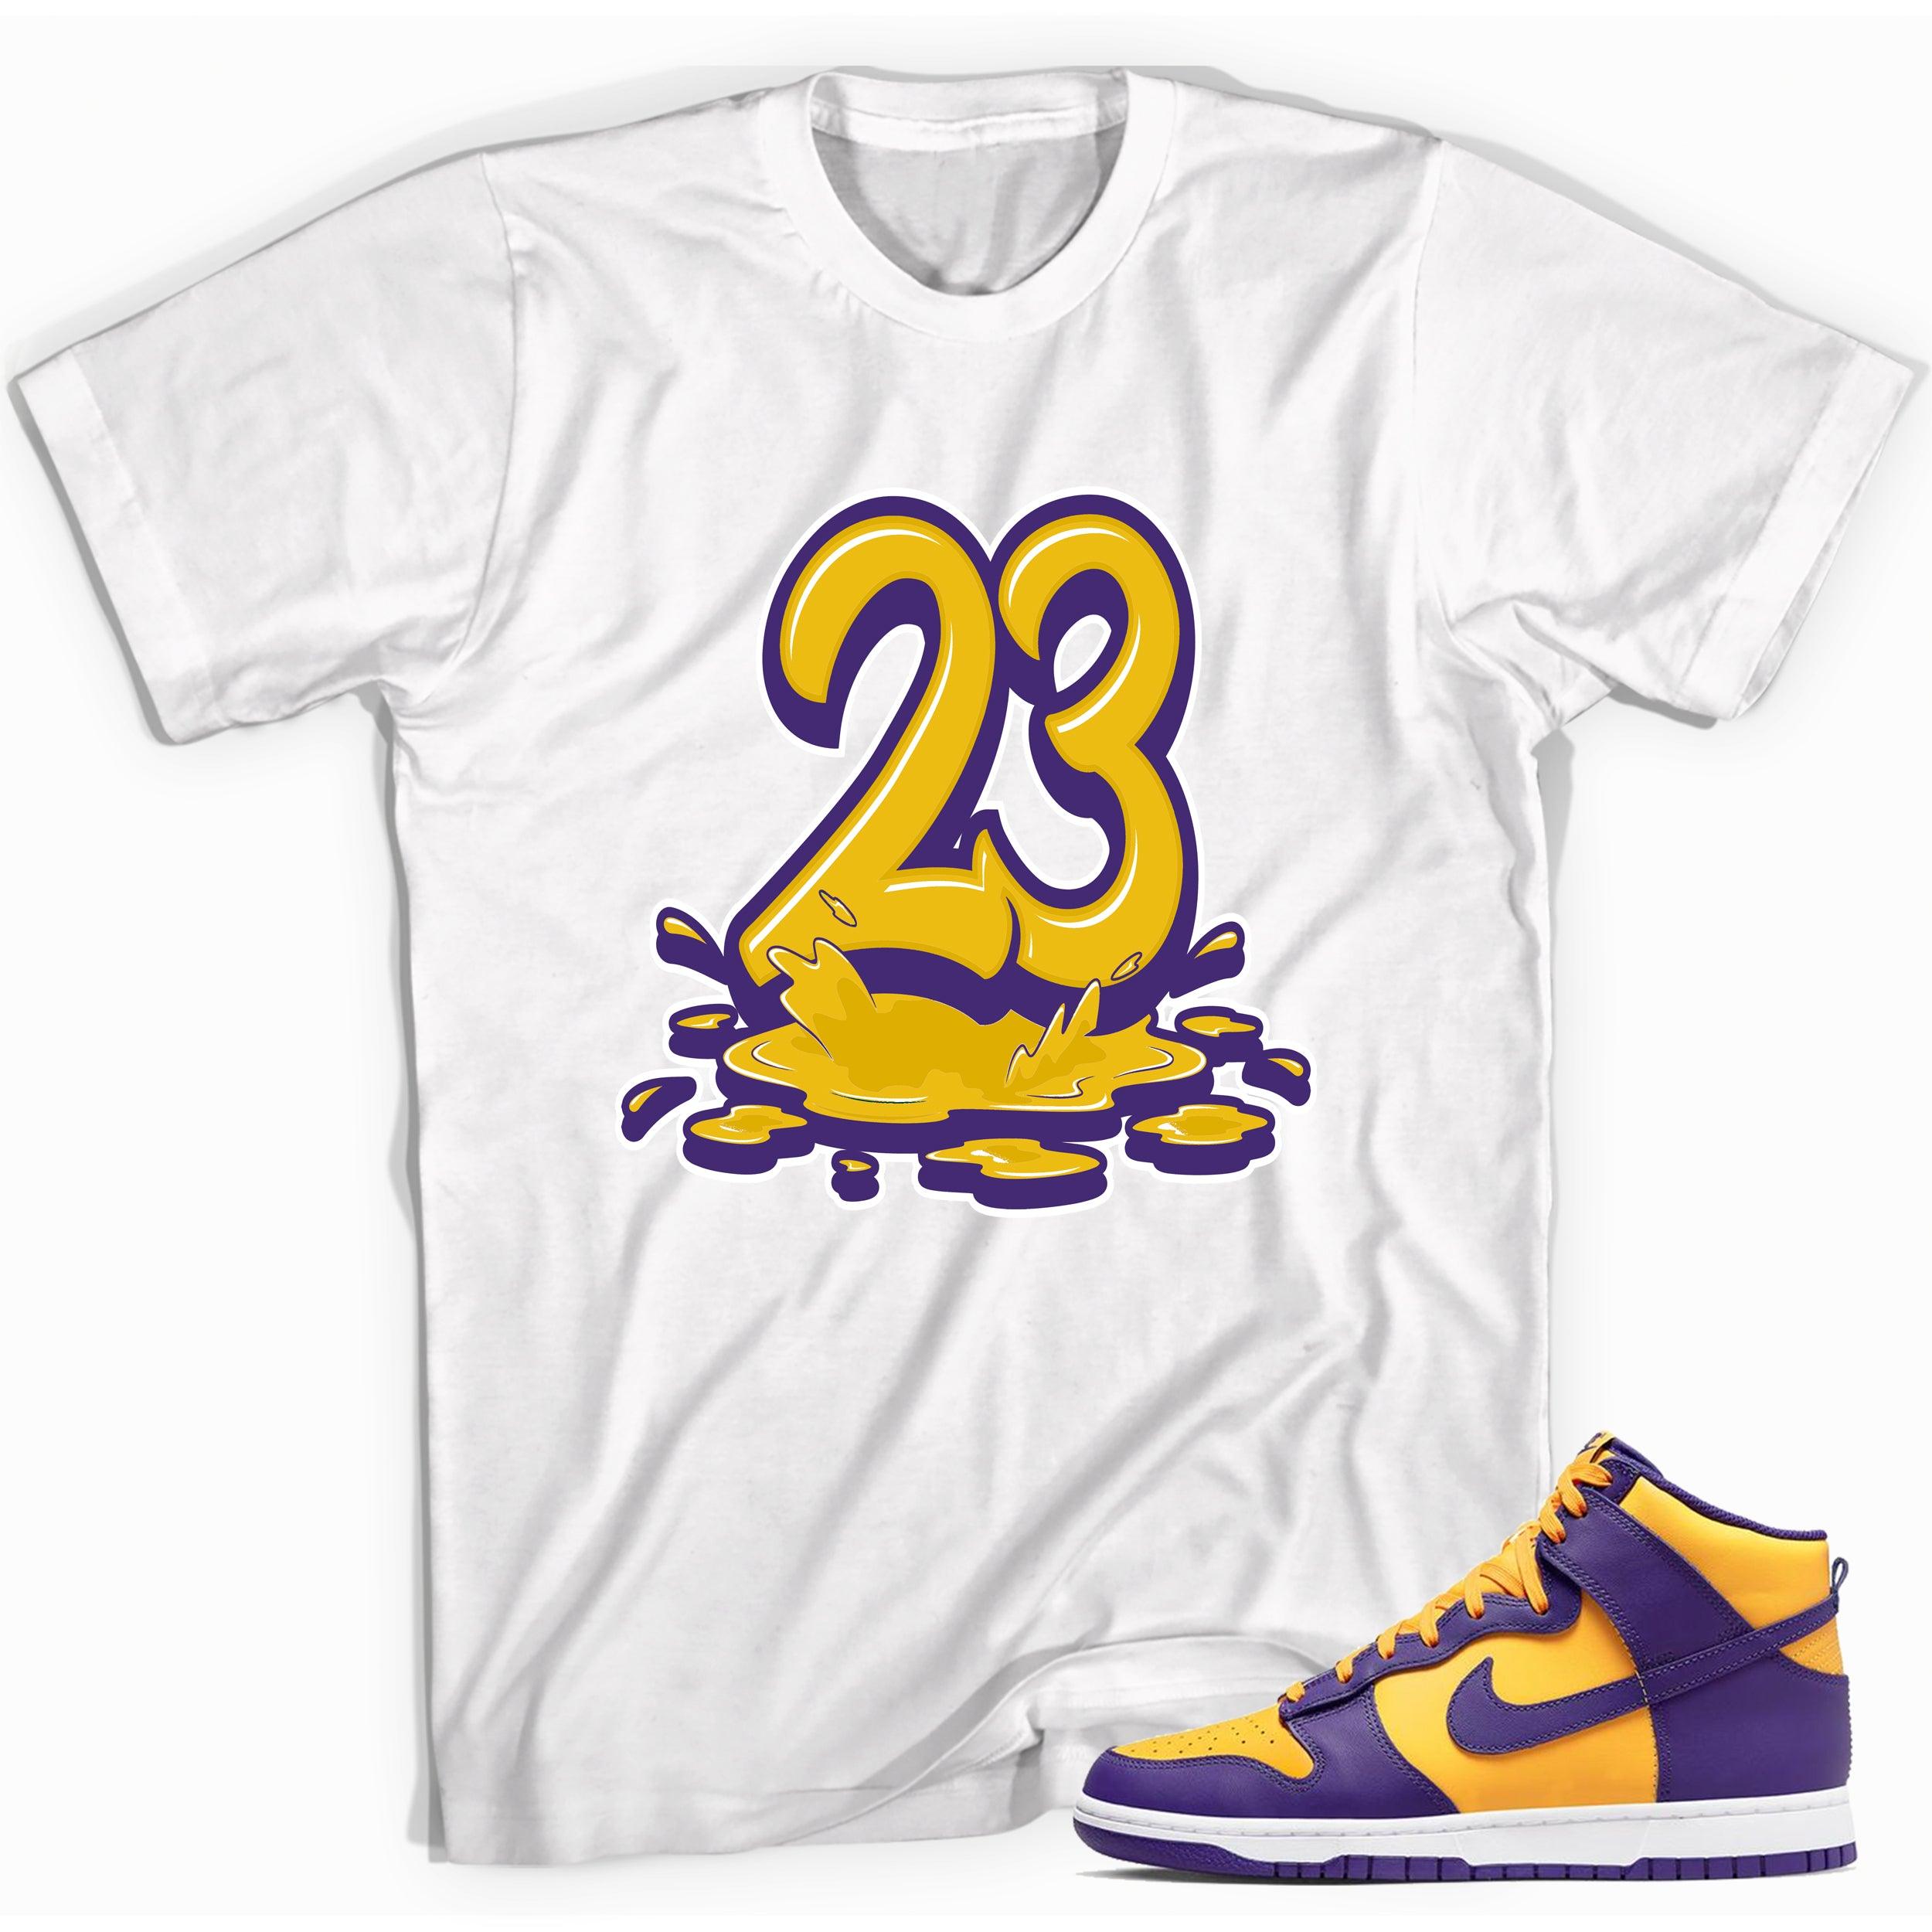 Number 23 Melting Shirt Nike Dunk High Lakers photo